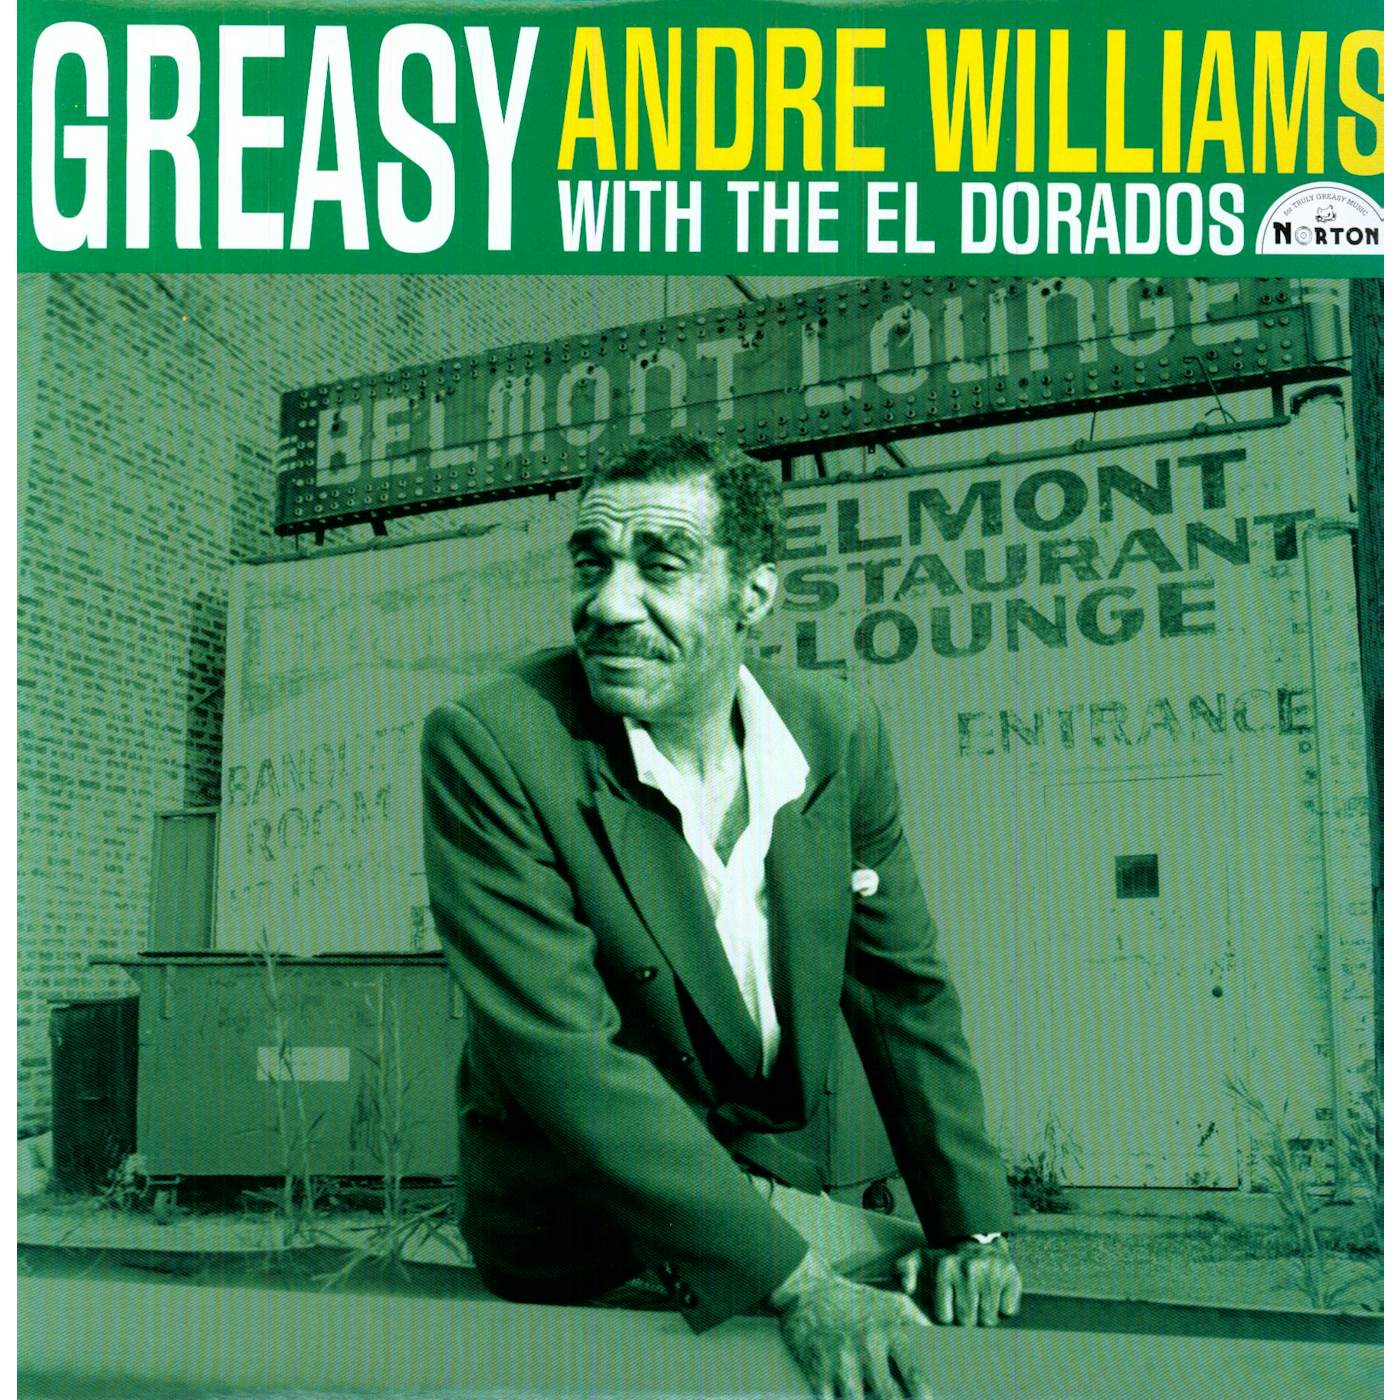 Andre Williams GREASY Vinyl Record